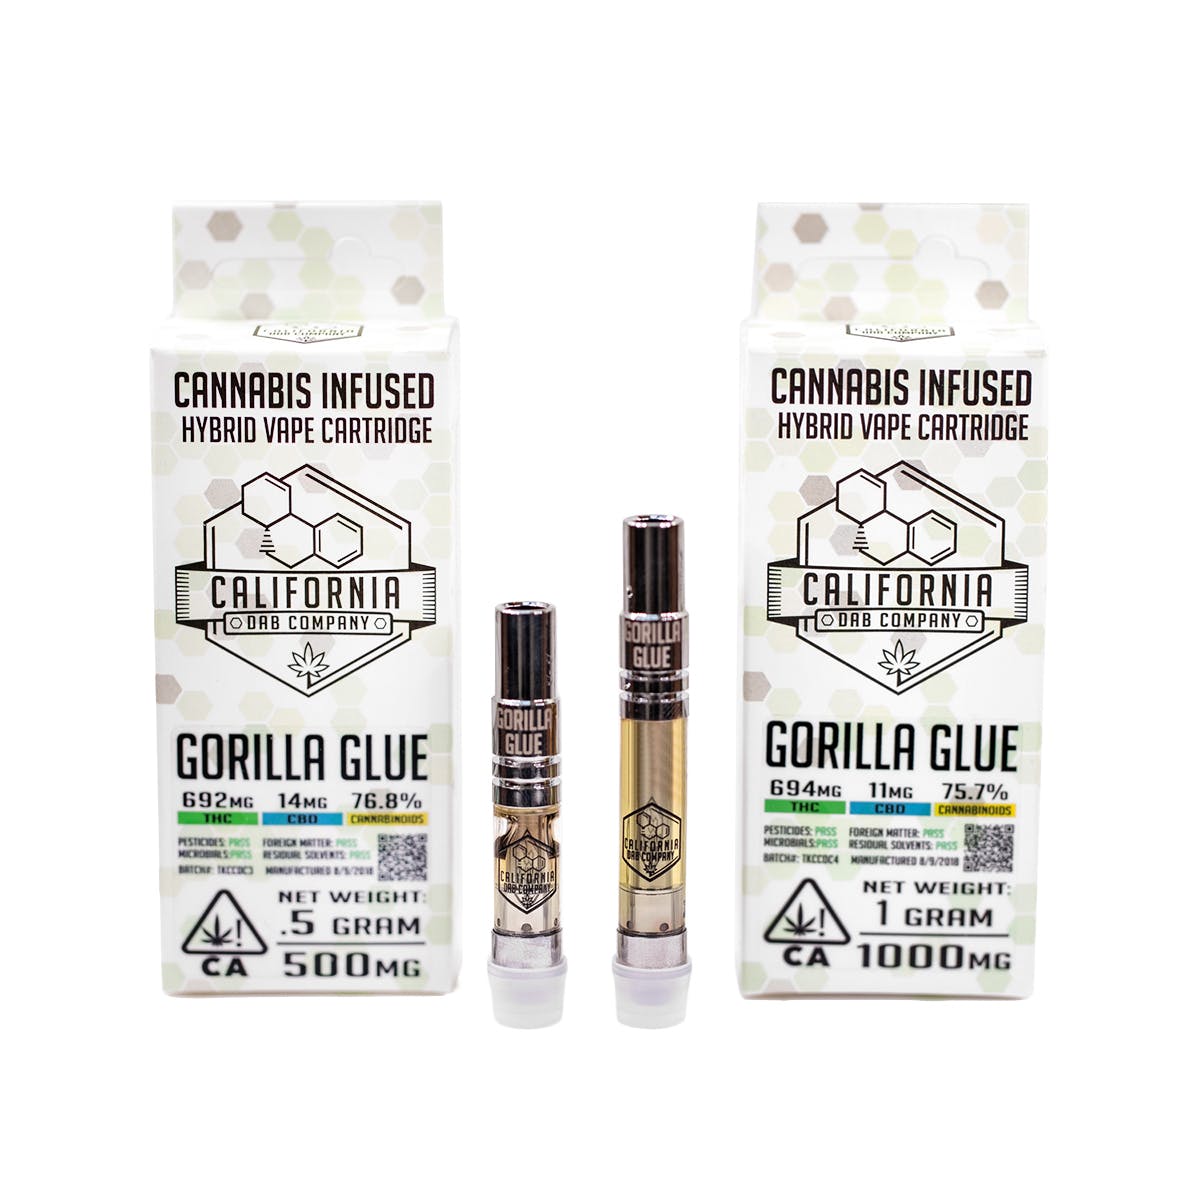 marijuana-dispensaries-laxcc-21-2b-in-los-angeles-gorilla-glue-vape-cartridge